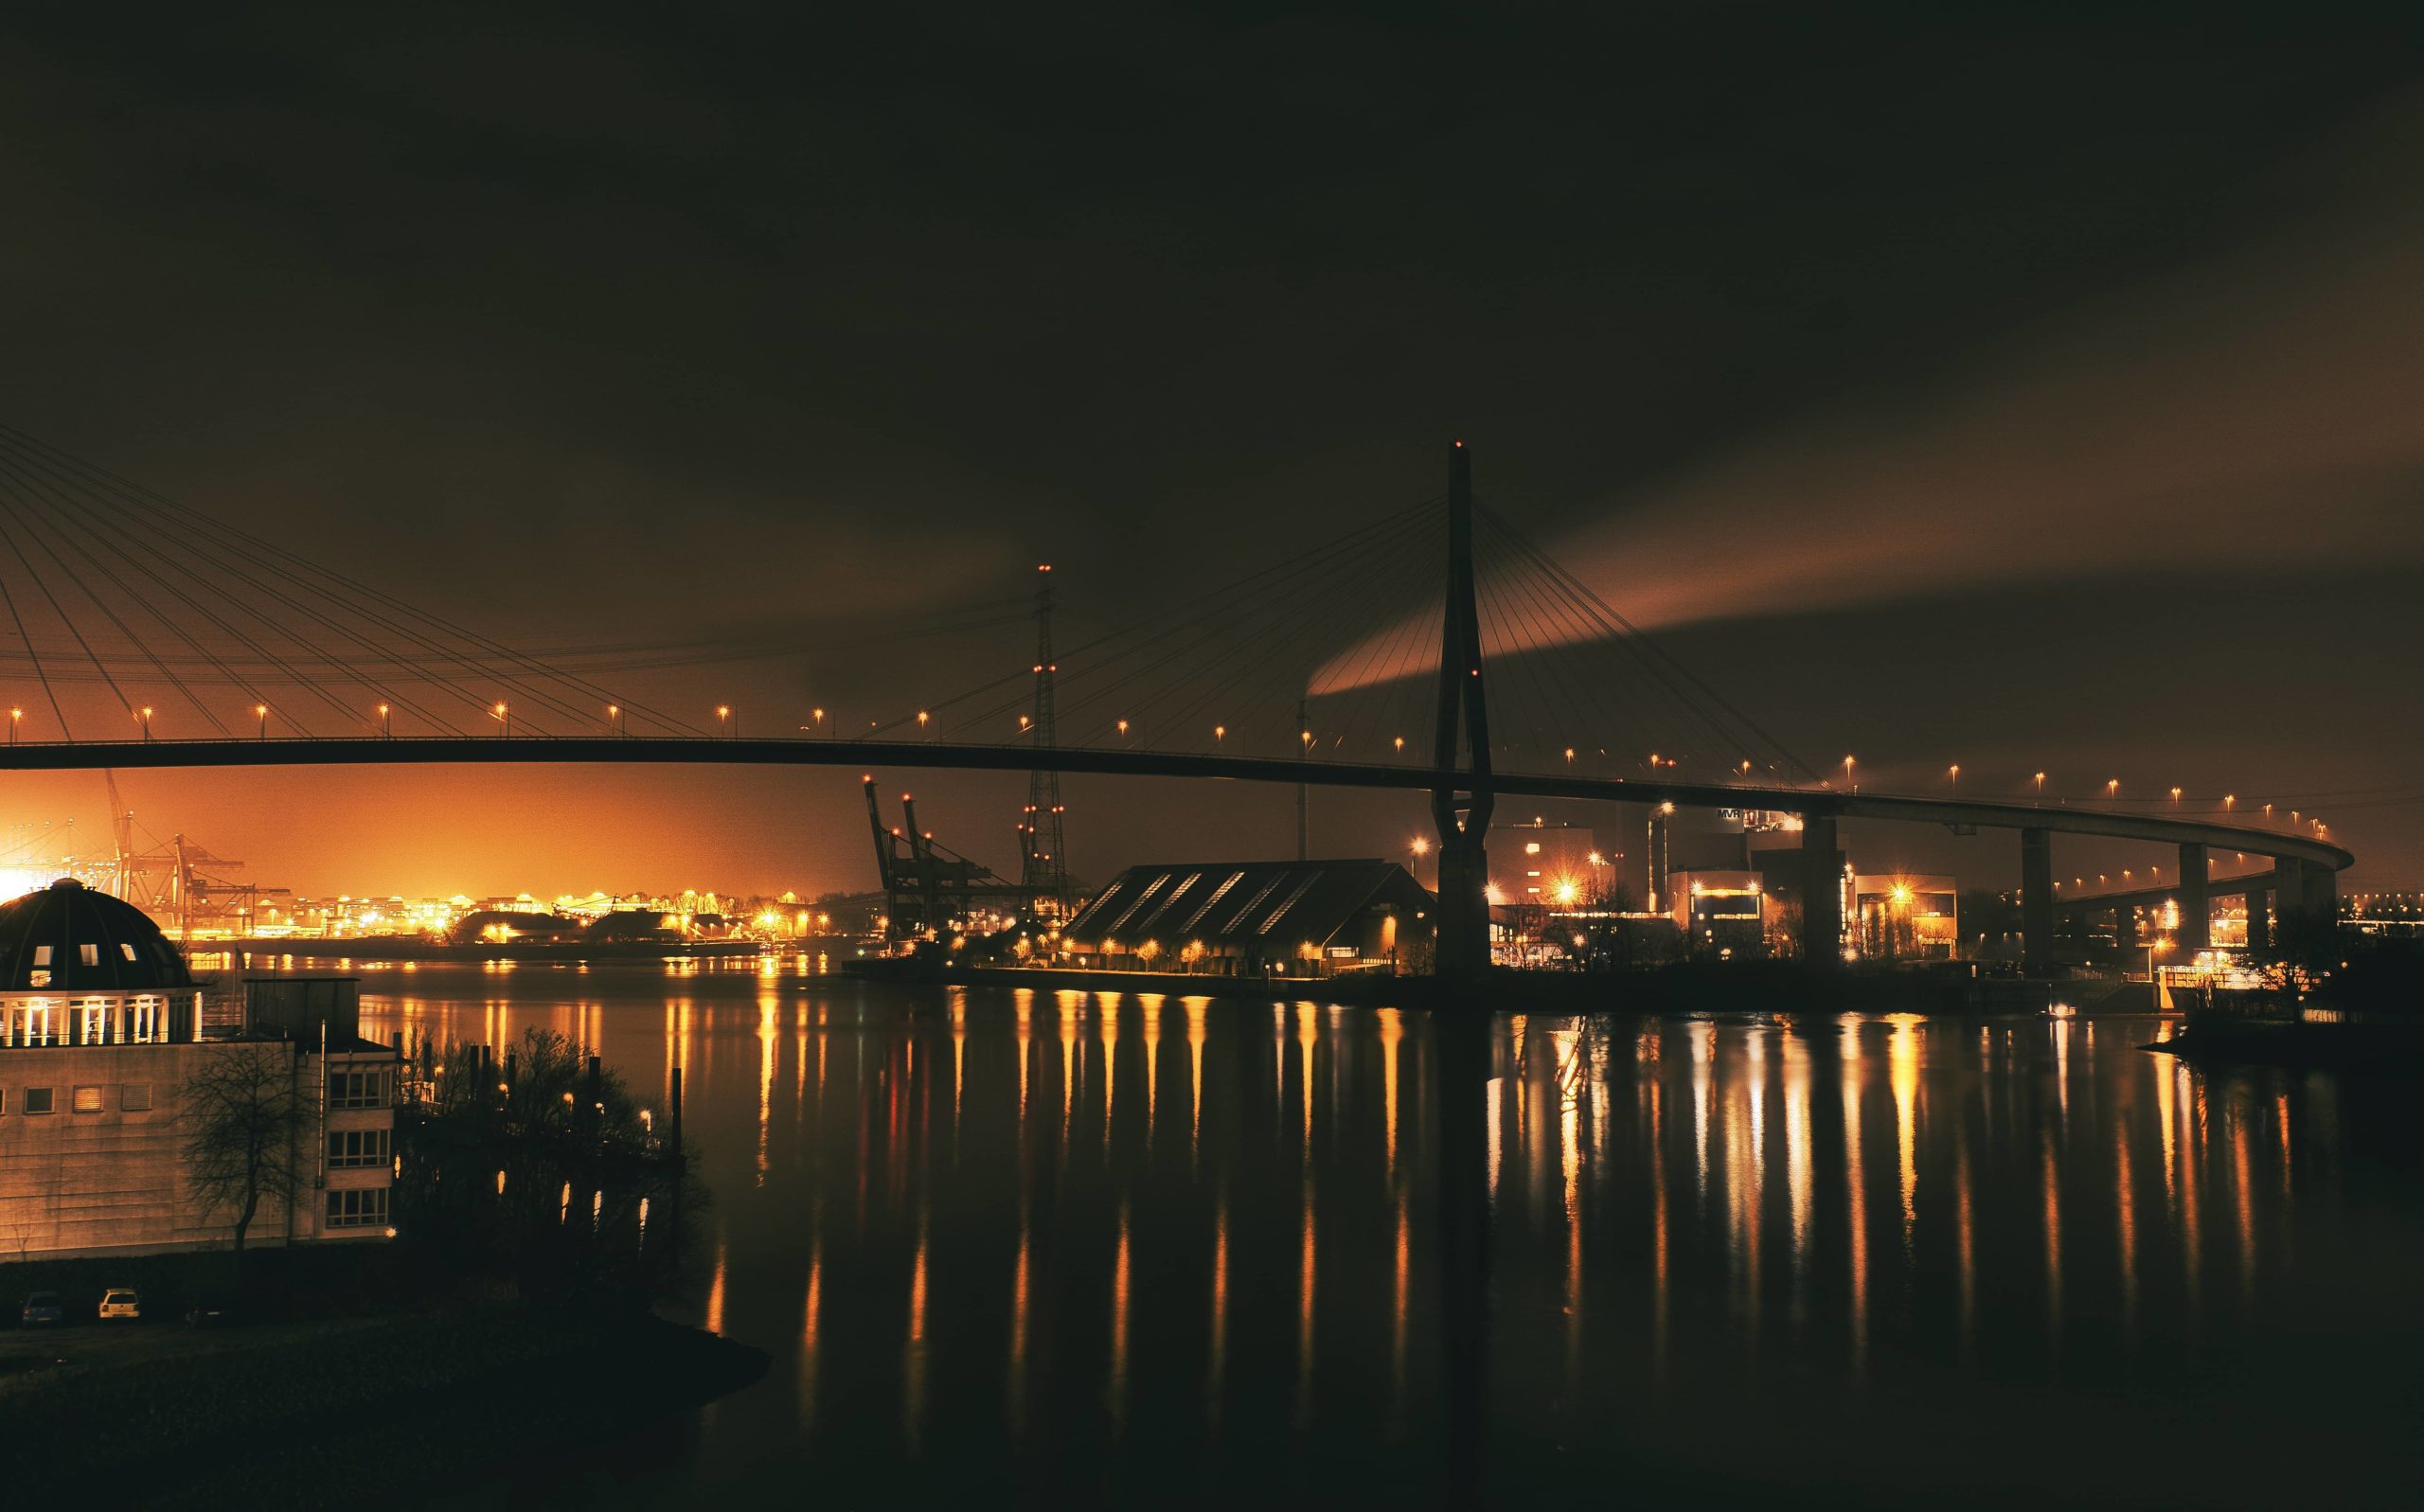 Köhlbrandbrücke im Hamburger Hafen bei Nacht, fotografiert von Danny Körber.